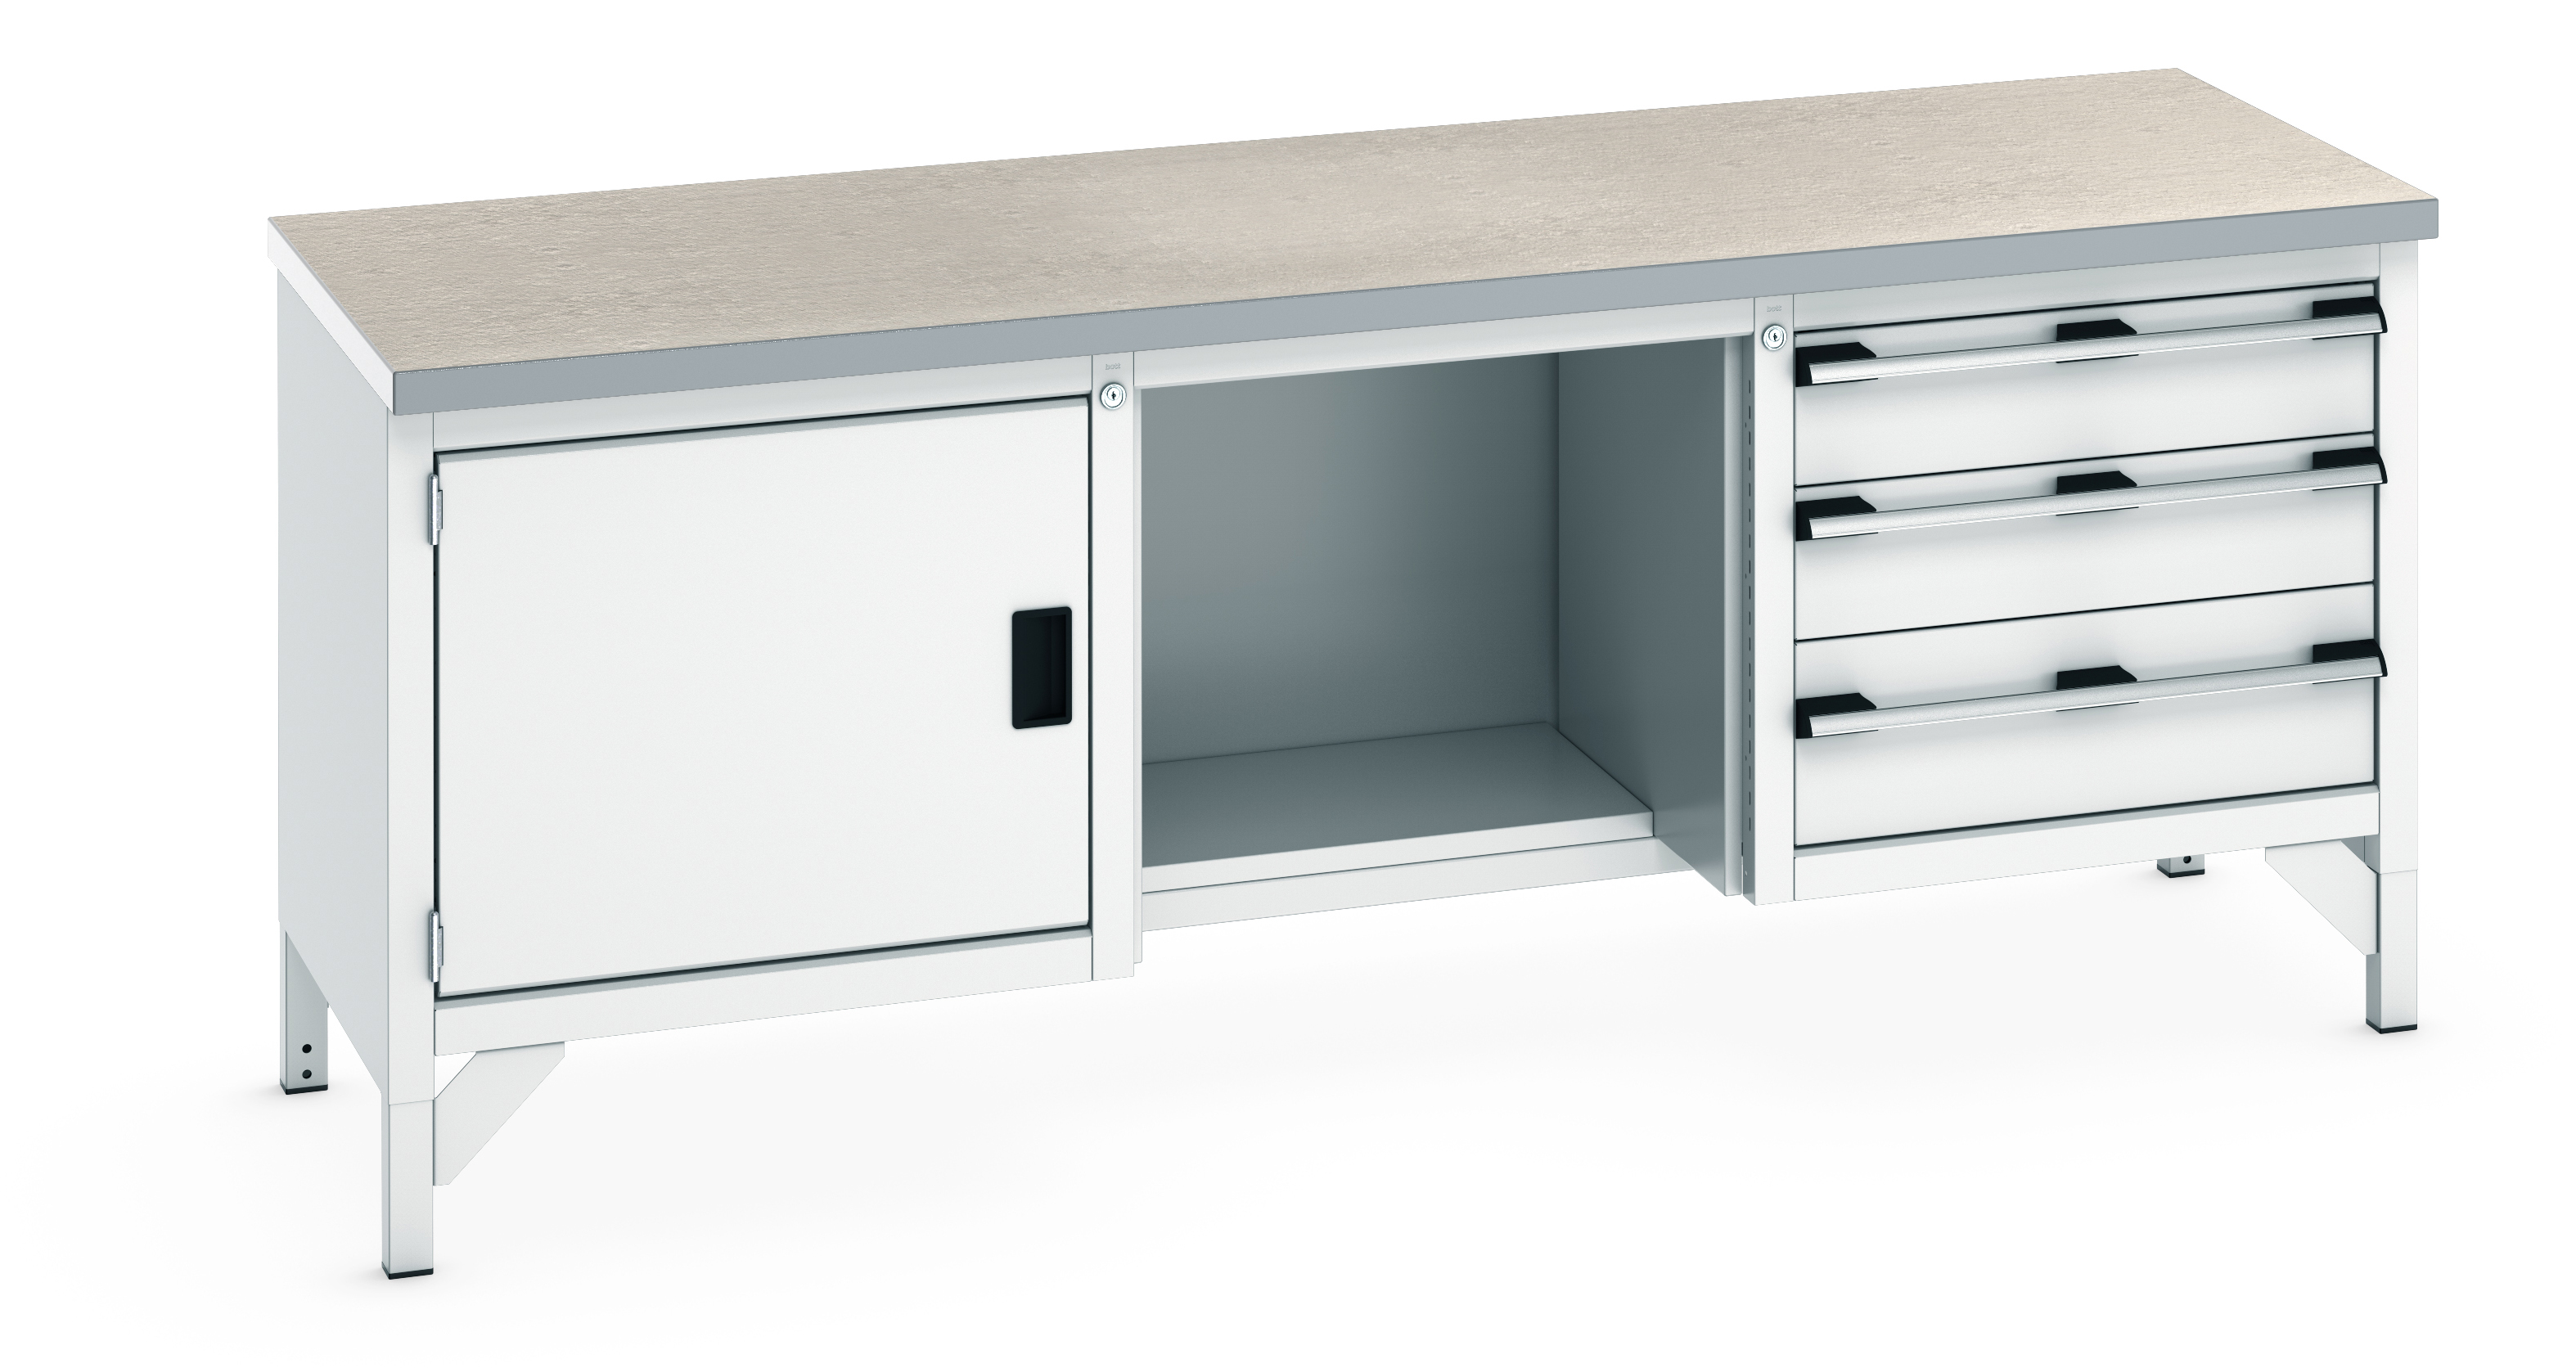 Bott Cubio Storage Bench With Full Cupboard / Open With Half Depth Base Shelf / 3 Drawer Cabinet - 41002072.16V